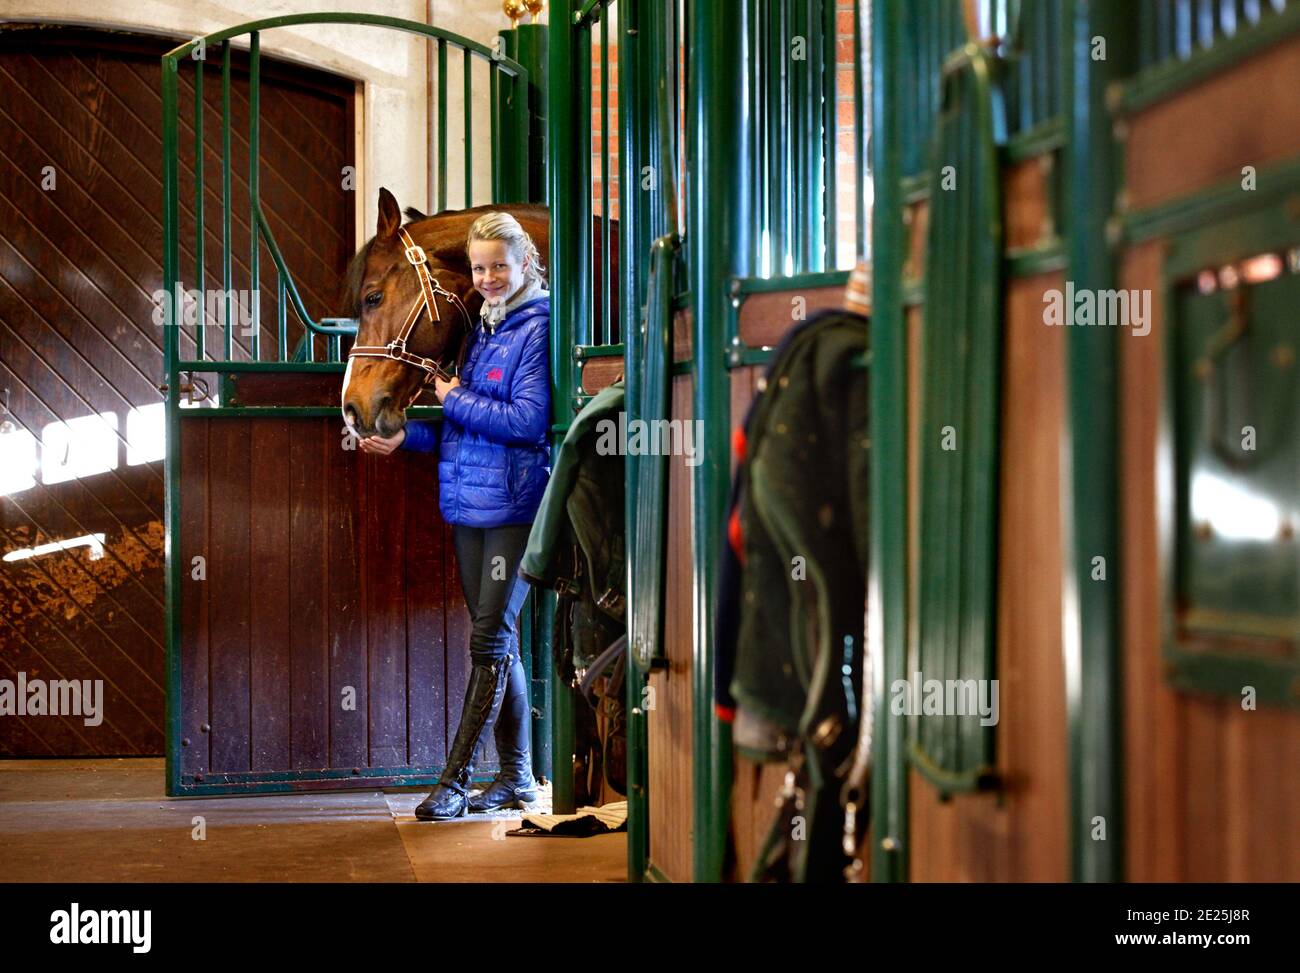 JONSTORP, SWEDEN- 16 NOVEMBER 2012: Malin Baryard Johnsson with the stable's star Tornesch also called 'Tore'. Stock Photo